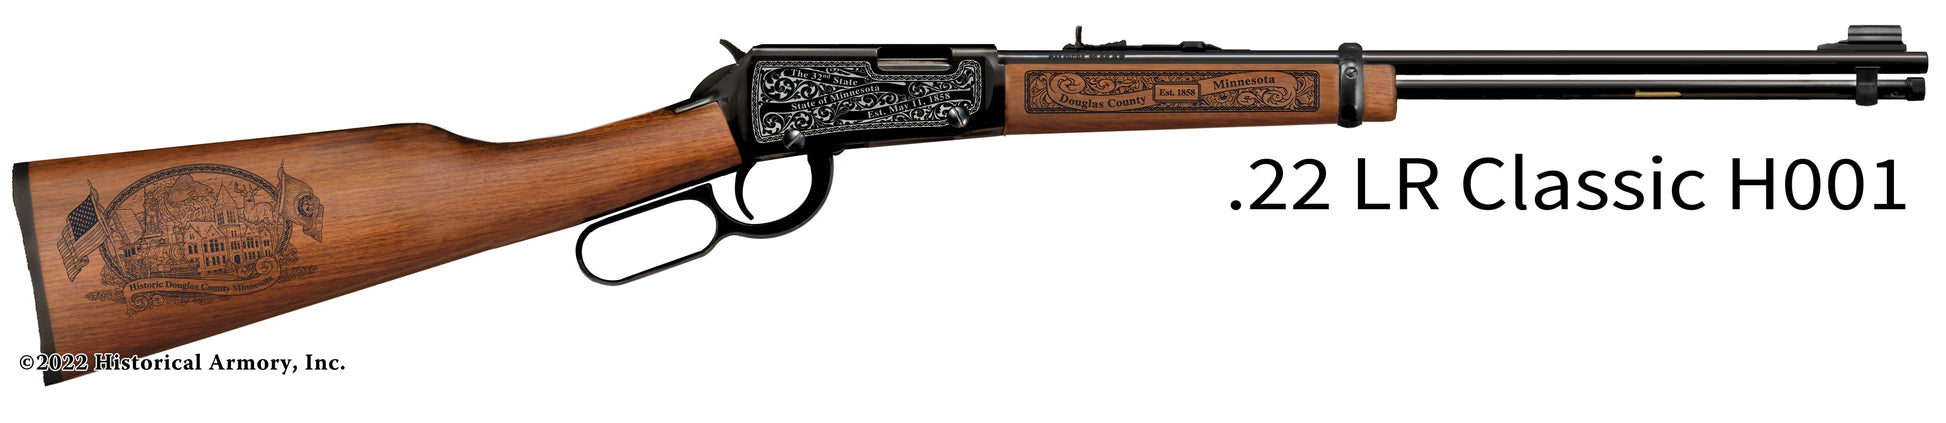 Douglas County Minnesota Engraved Henry H001 Rifle